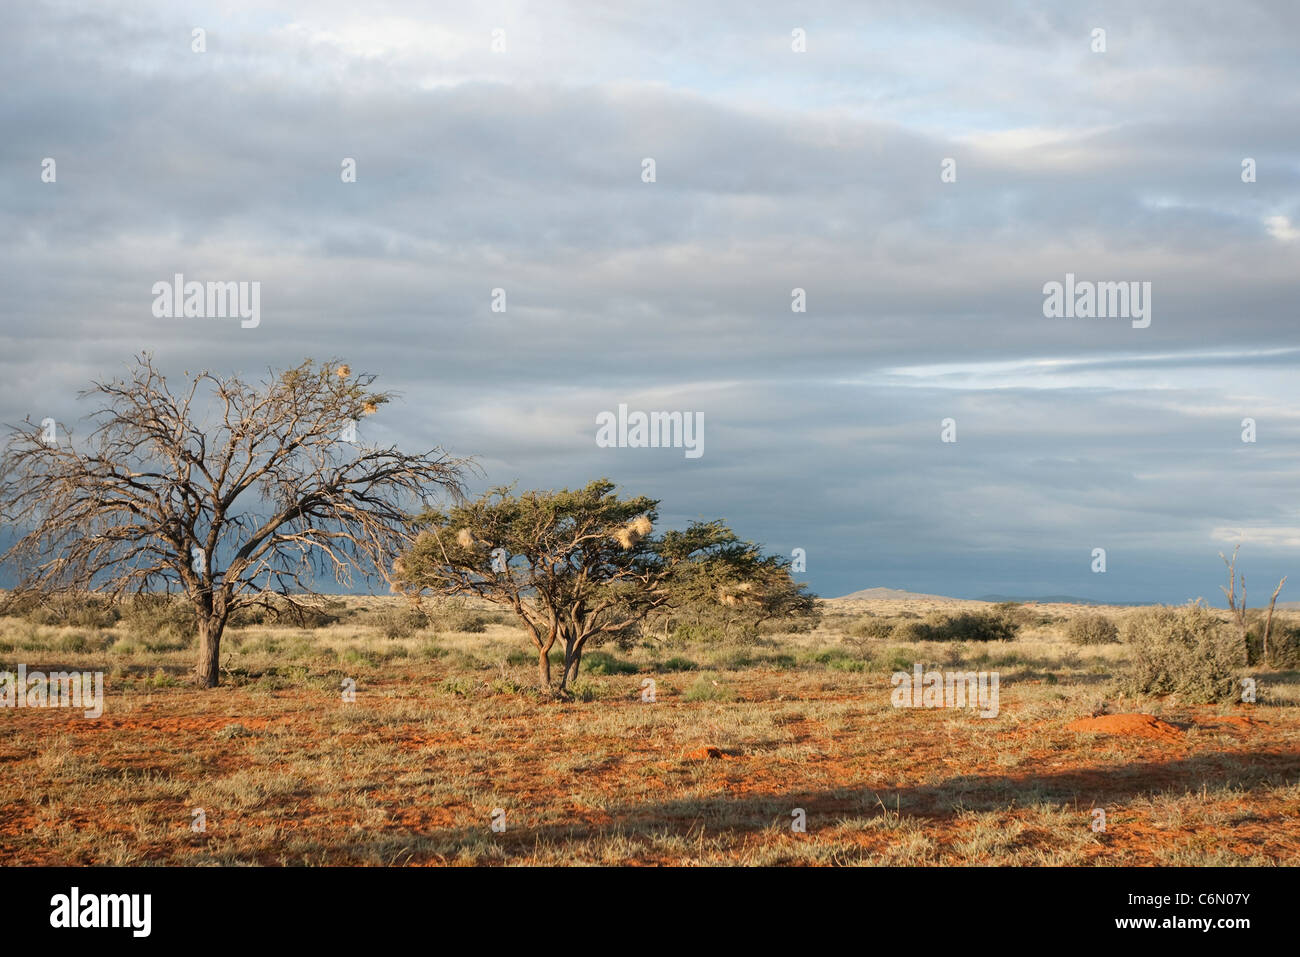 Kalahari landscape with trees and communal weavers nests Stock Photo